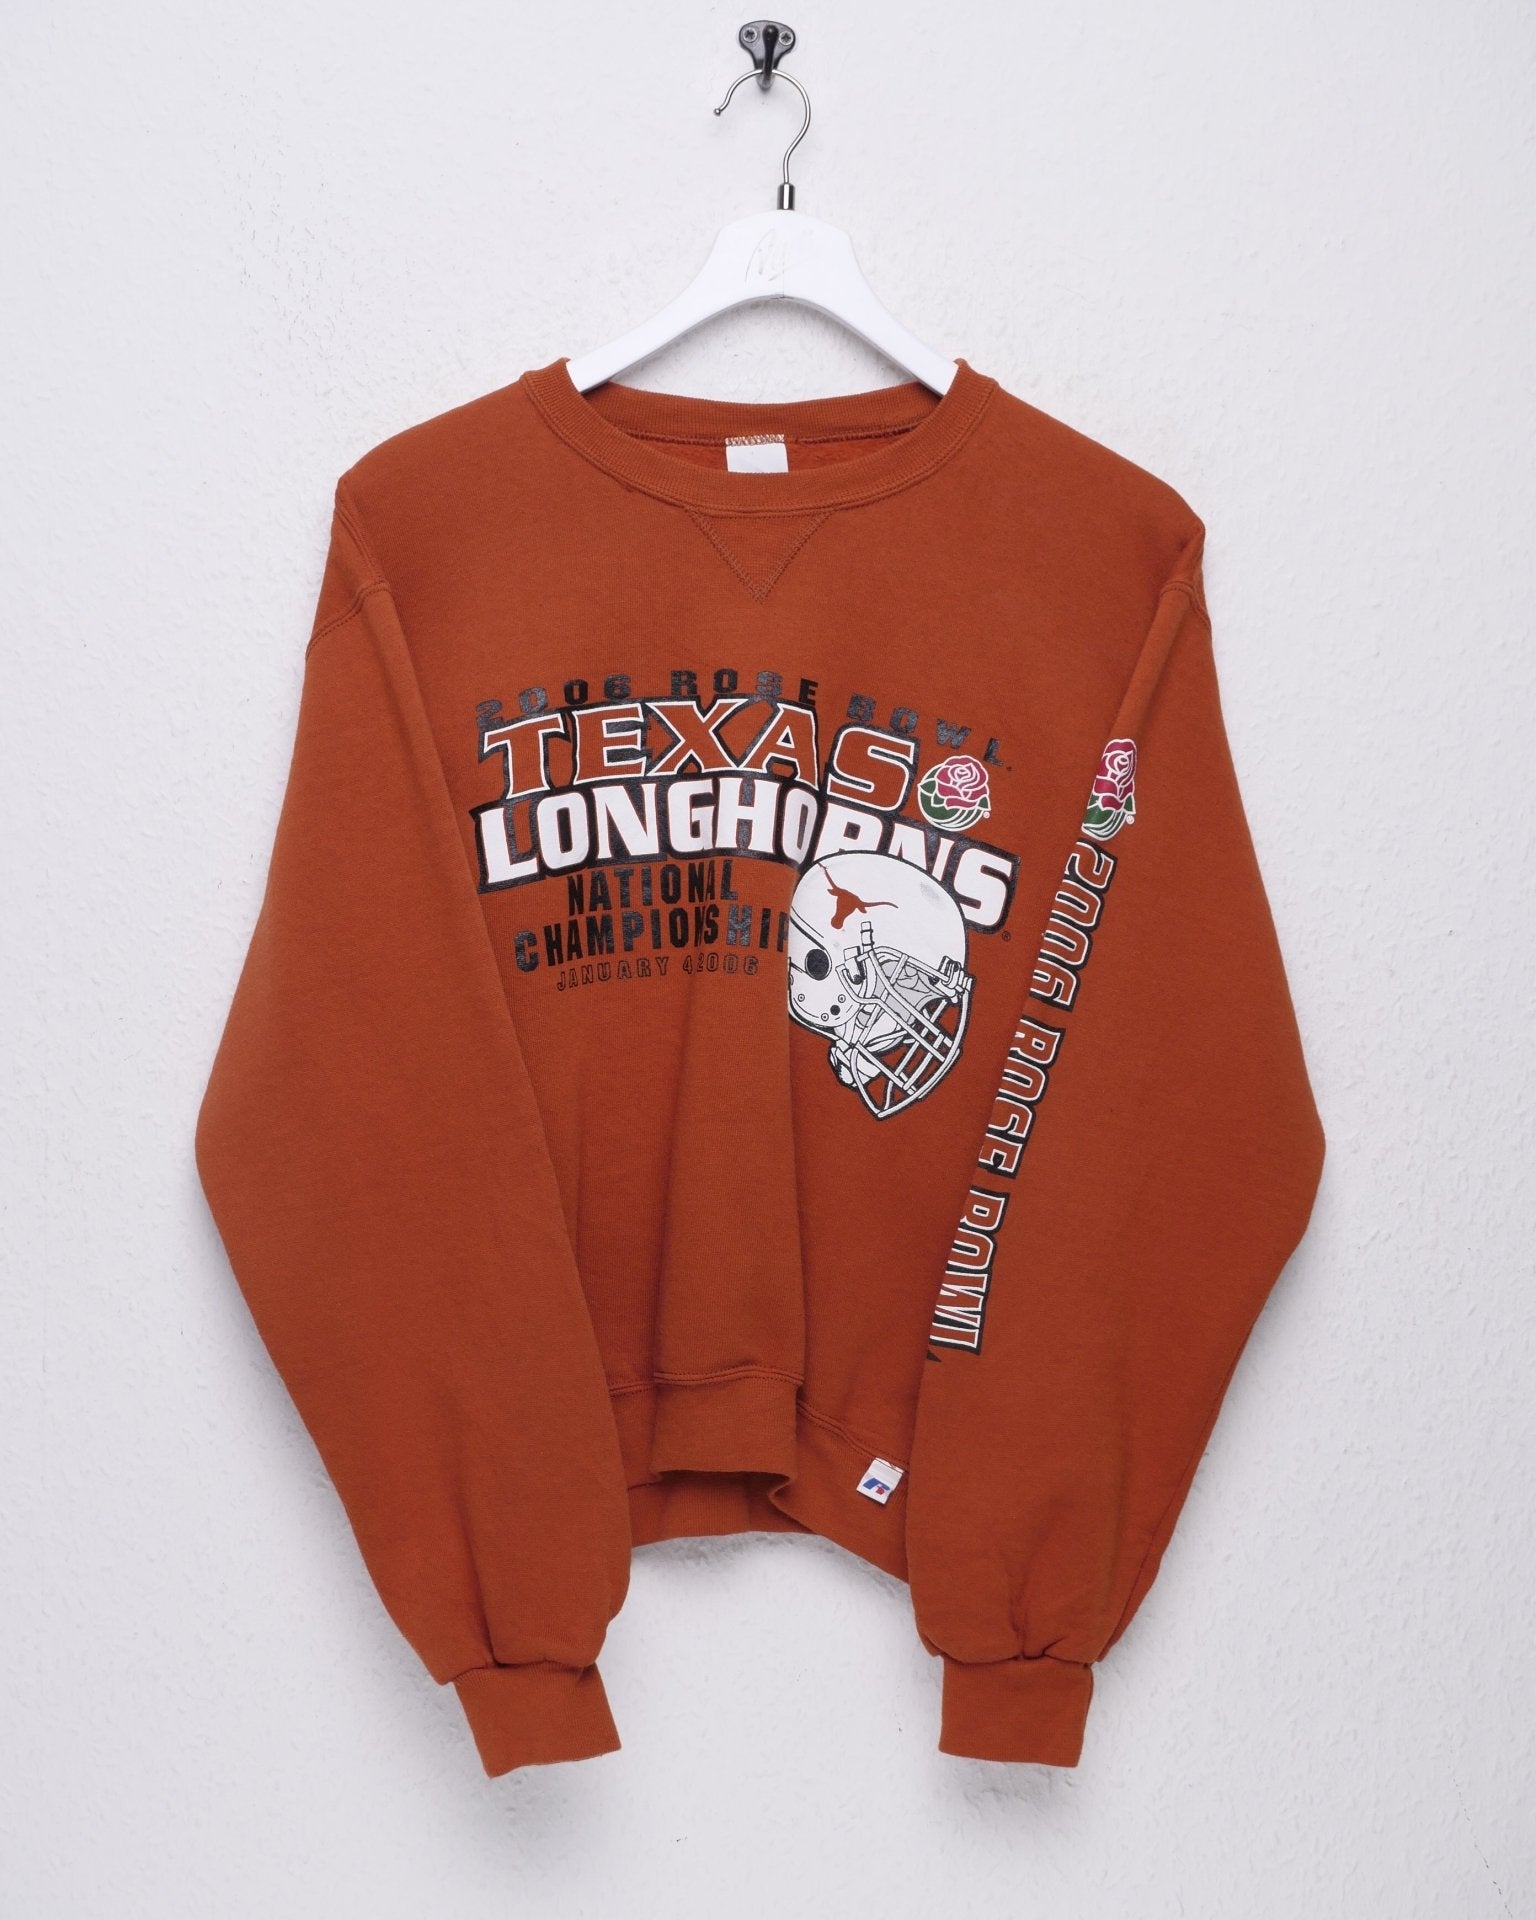 NFL 'Texas Longhorns' printed Graphic orange Sweater - Peeces